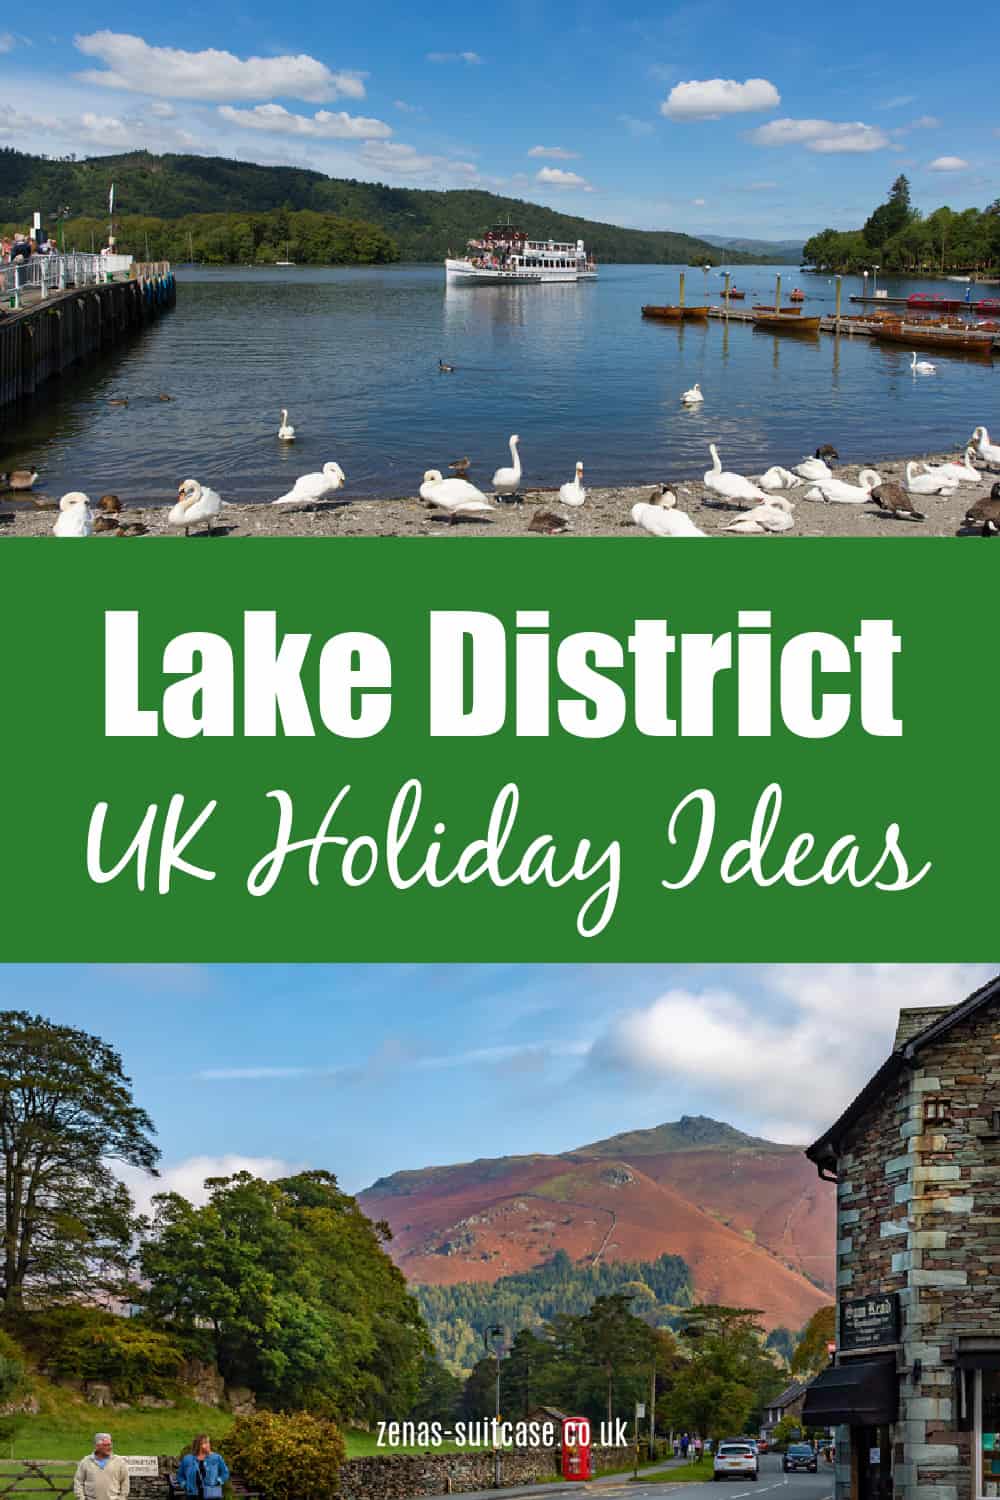 Lake District - Safe UK holidays ideas 